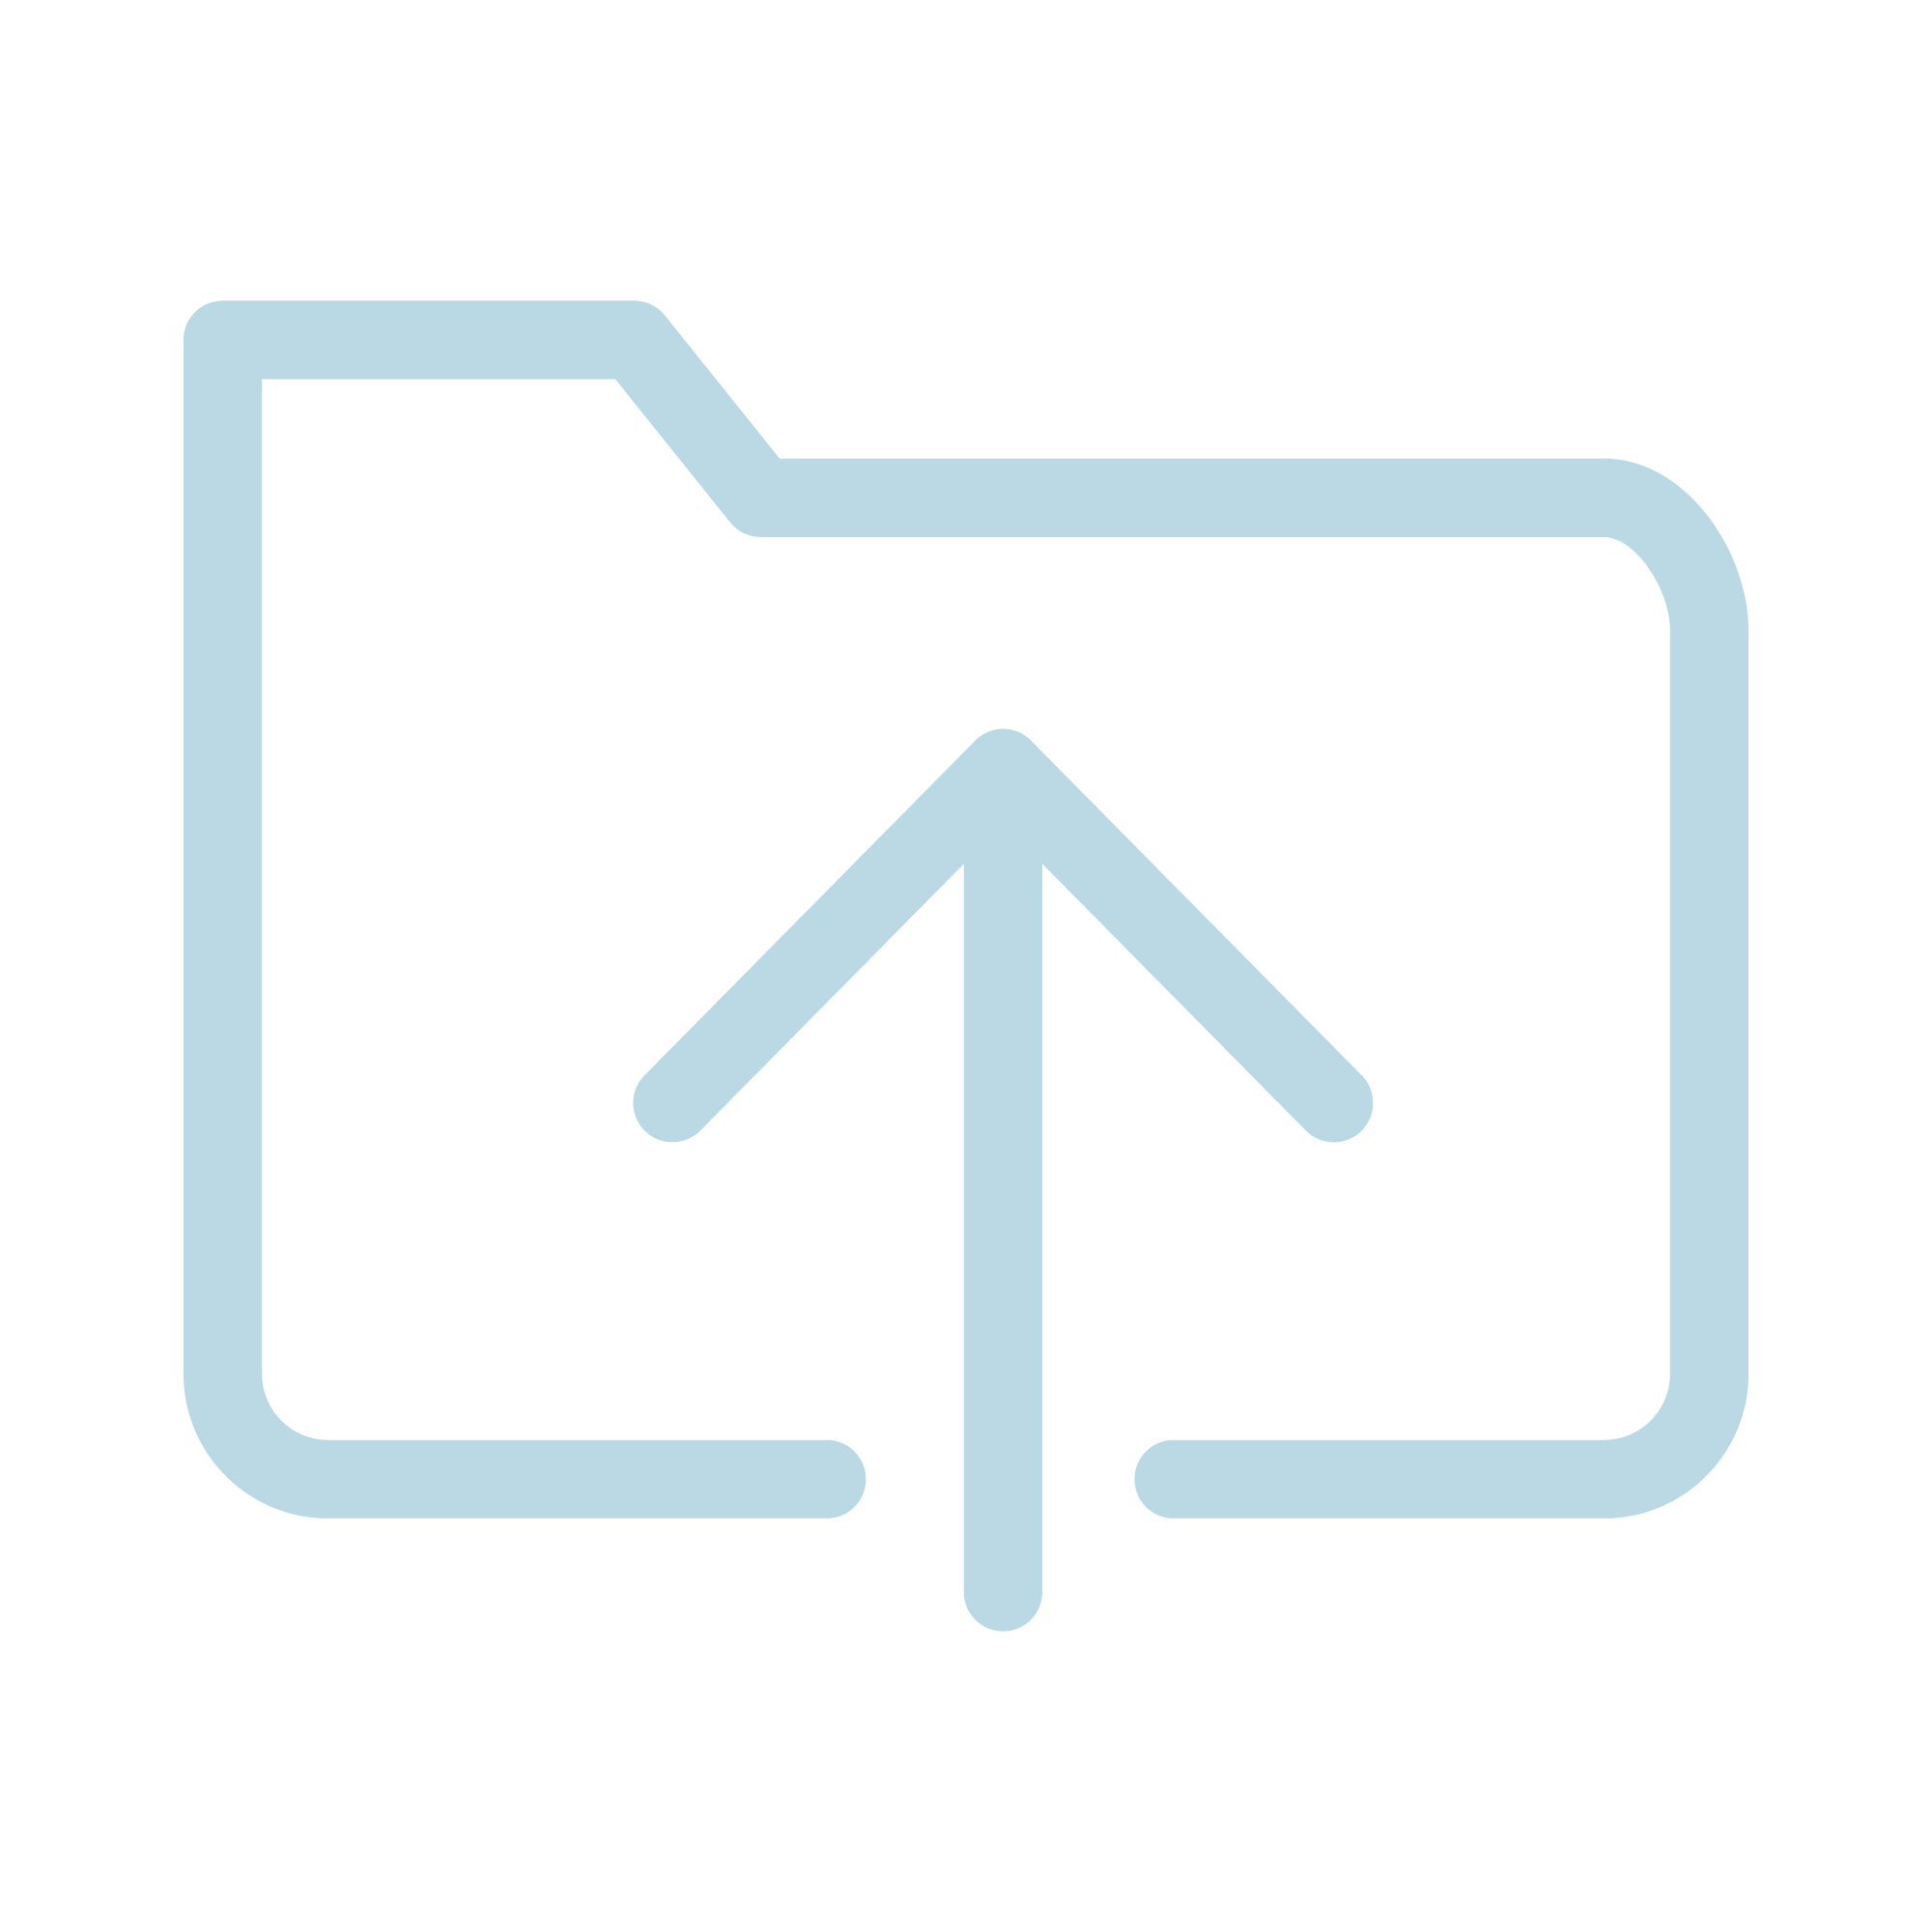 Light blue folder icon with upwards arrow in centre